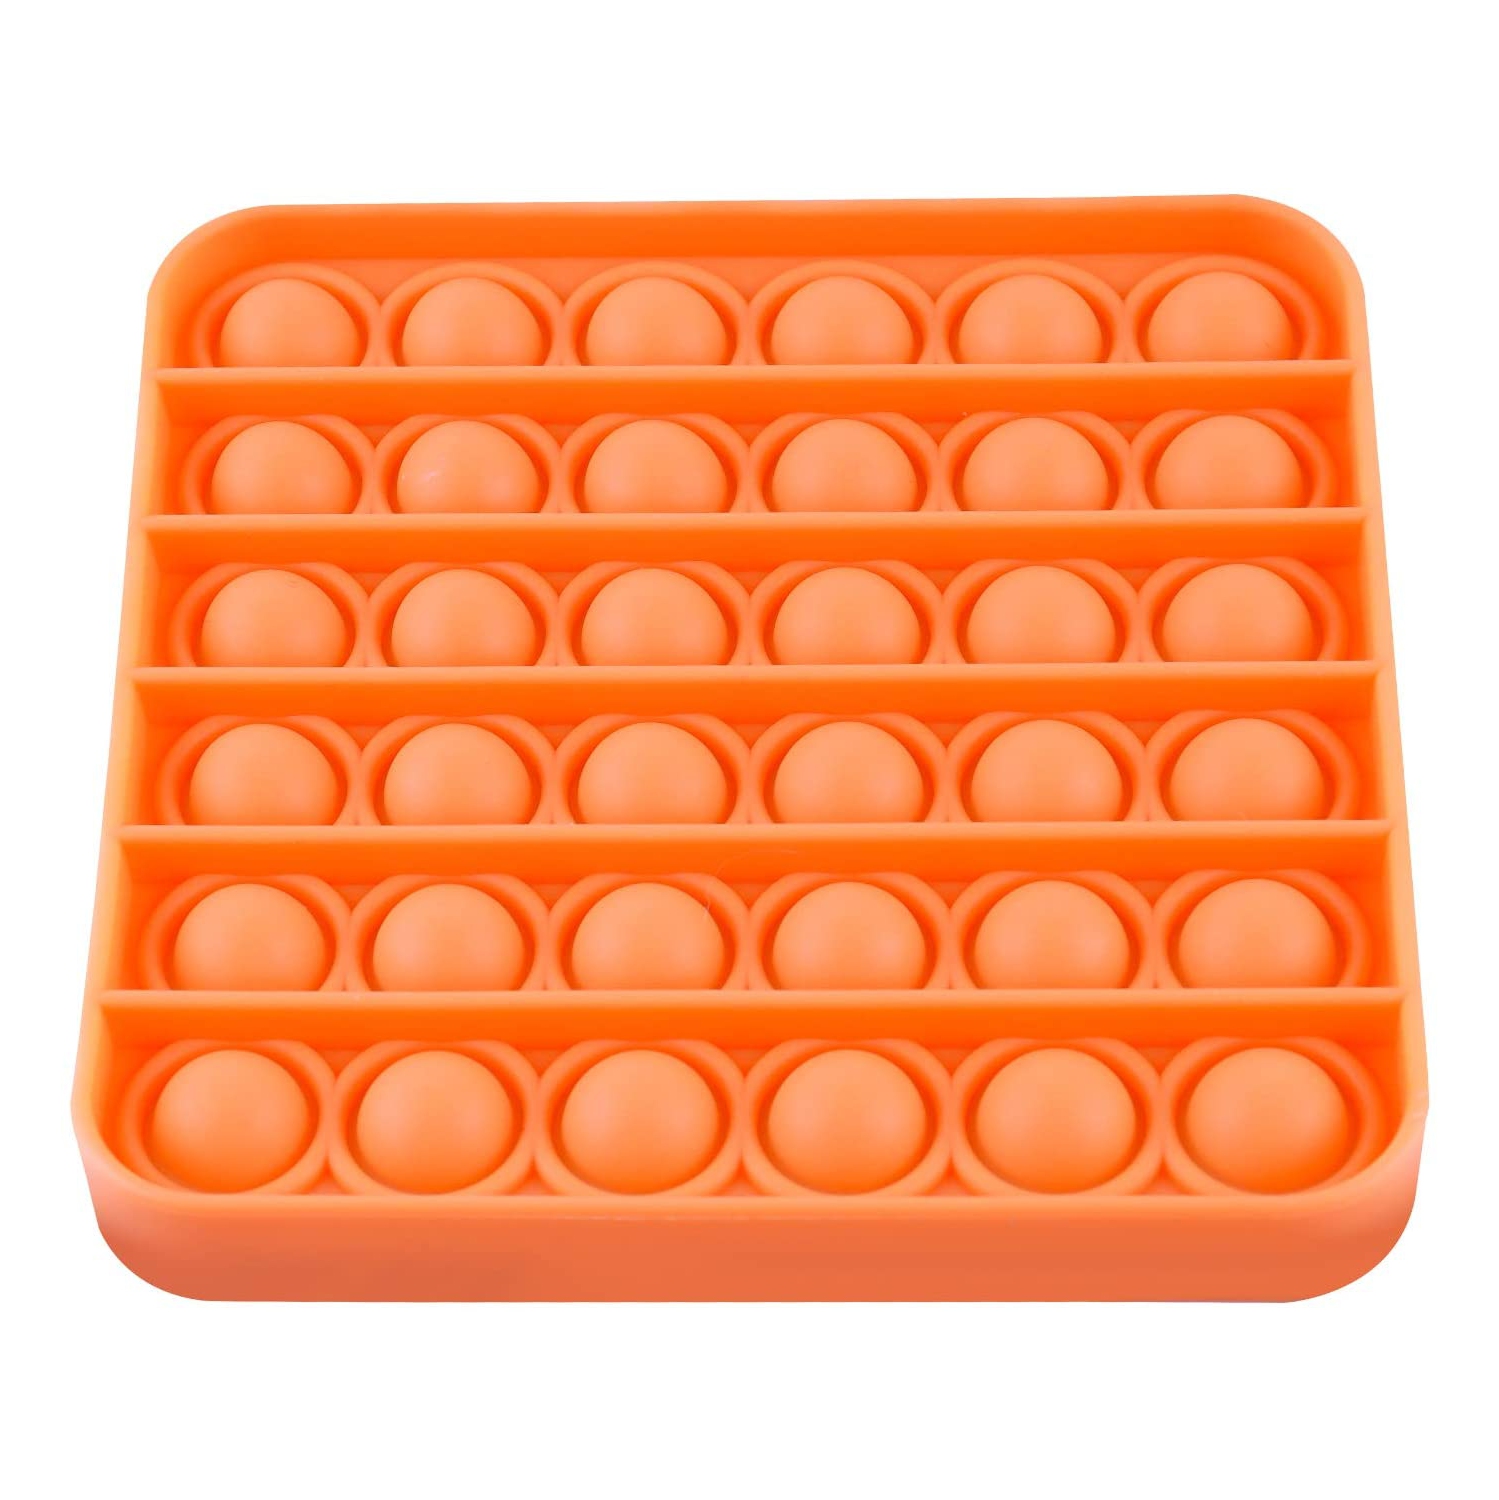 (CABLESHARK)Orange Square Push Pop Bubble Fidget Toy [Toys, Ages 3+](FREE SHIPPING)